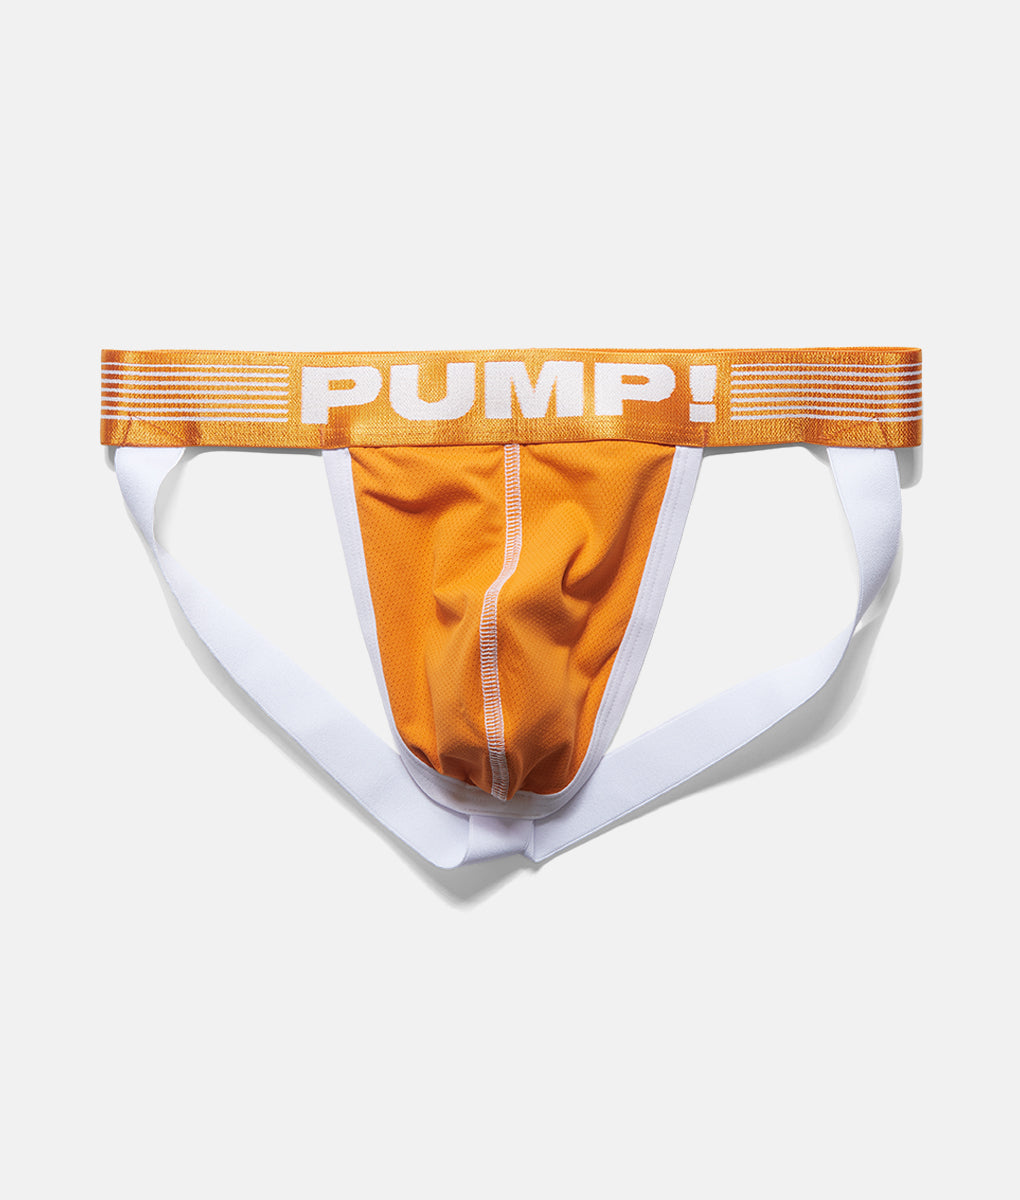 Velocity jockstrap, Pump!, Shop Men's Underwear: Trunks, Boxers & Briefs